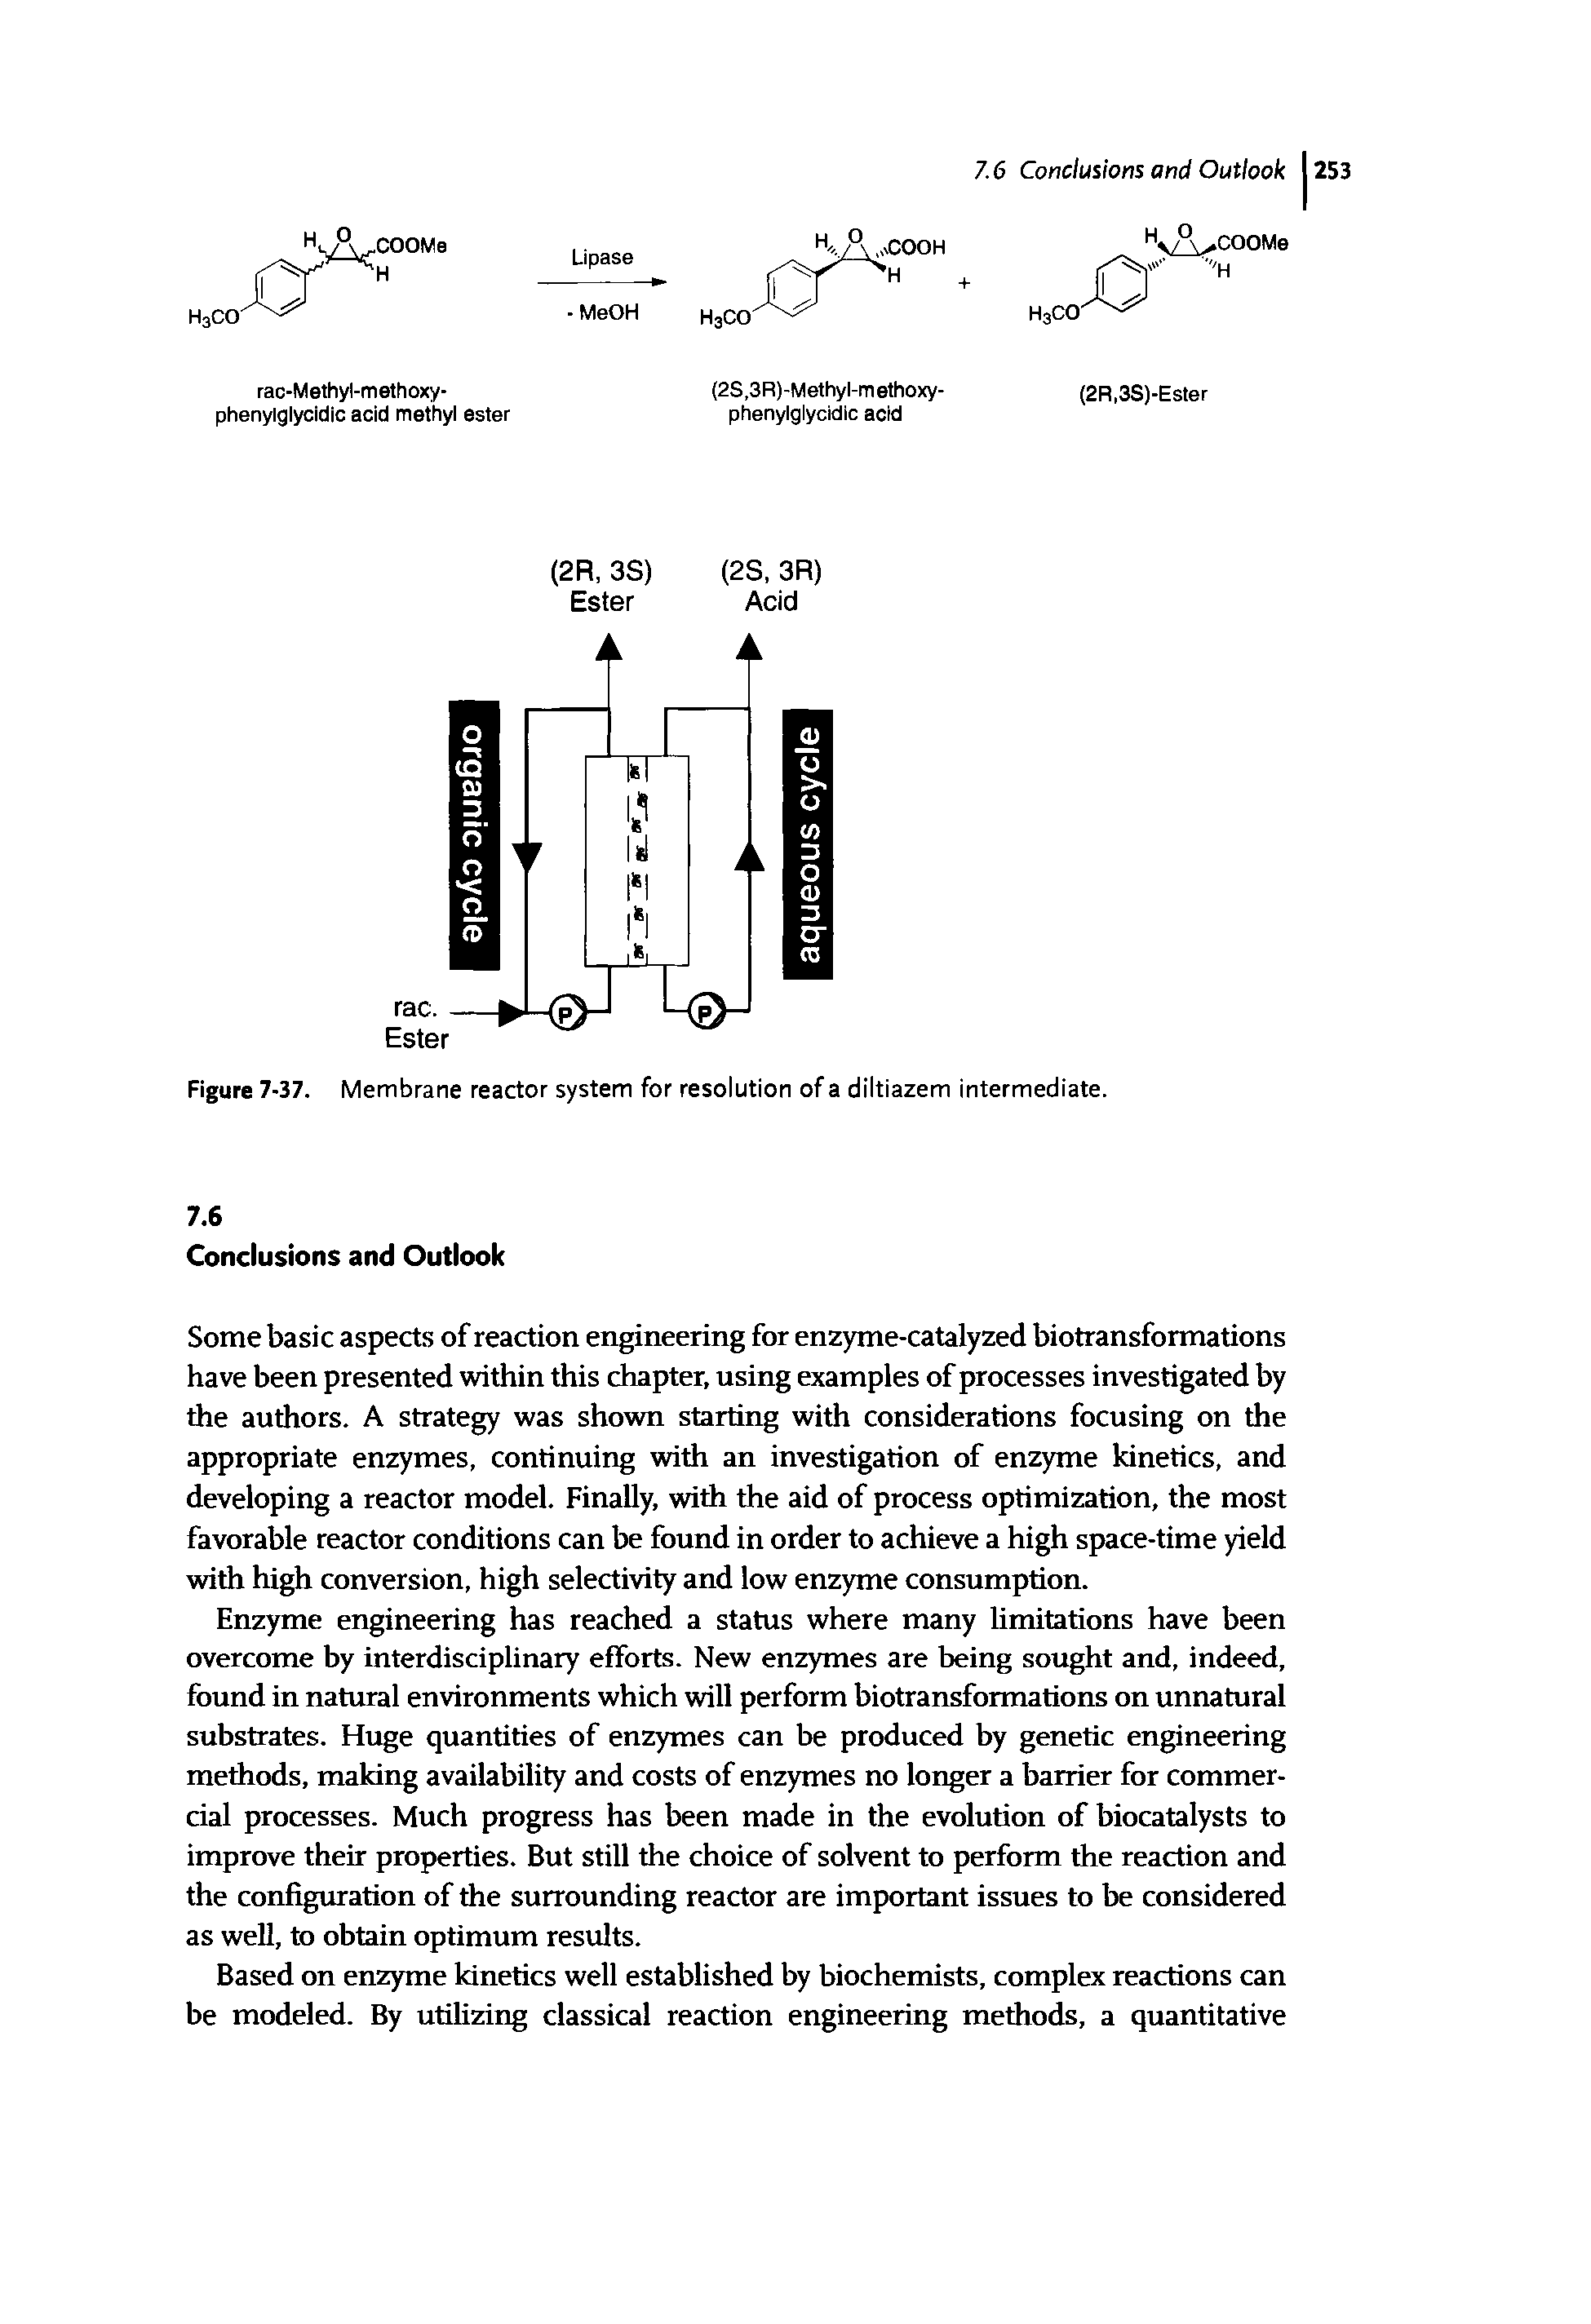 Figure 7-37. Membrane reactor system for resolution of a diltiazem intermediate.